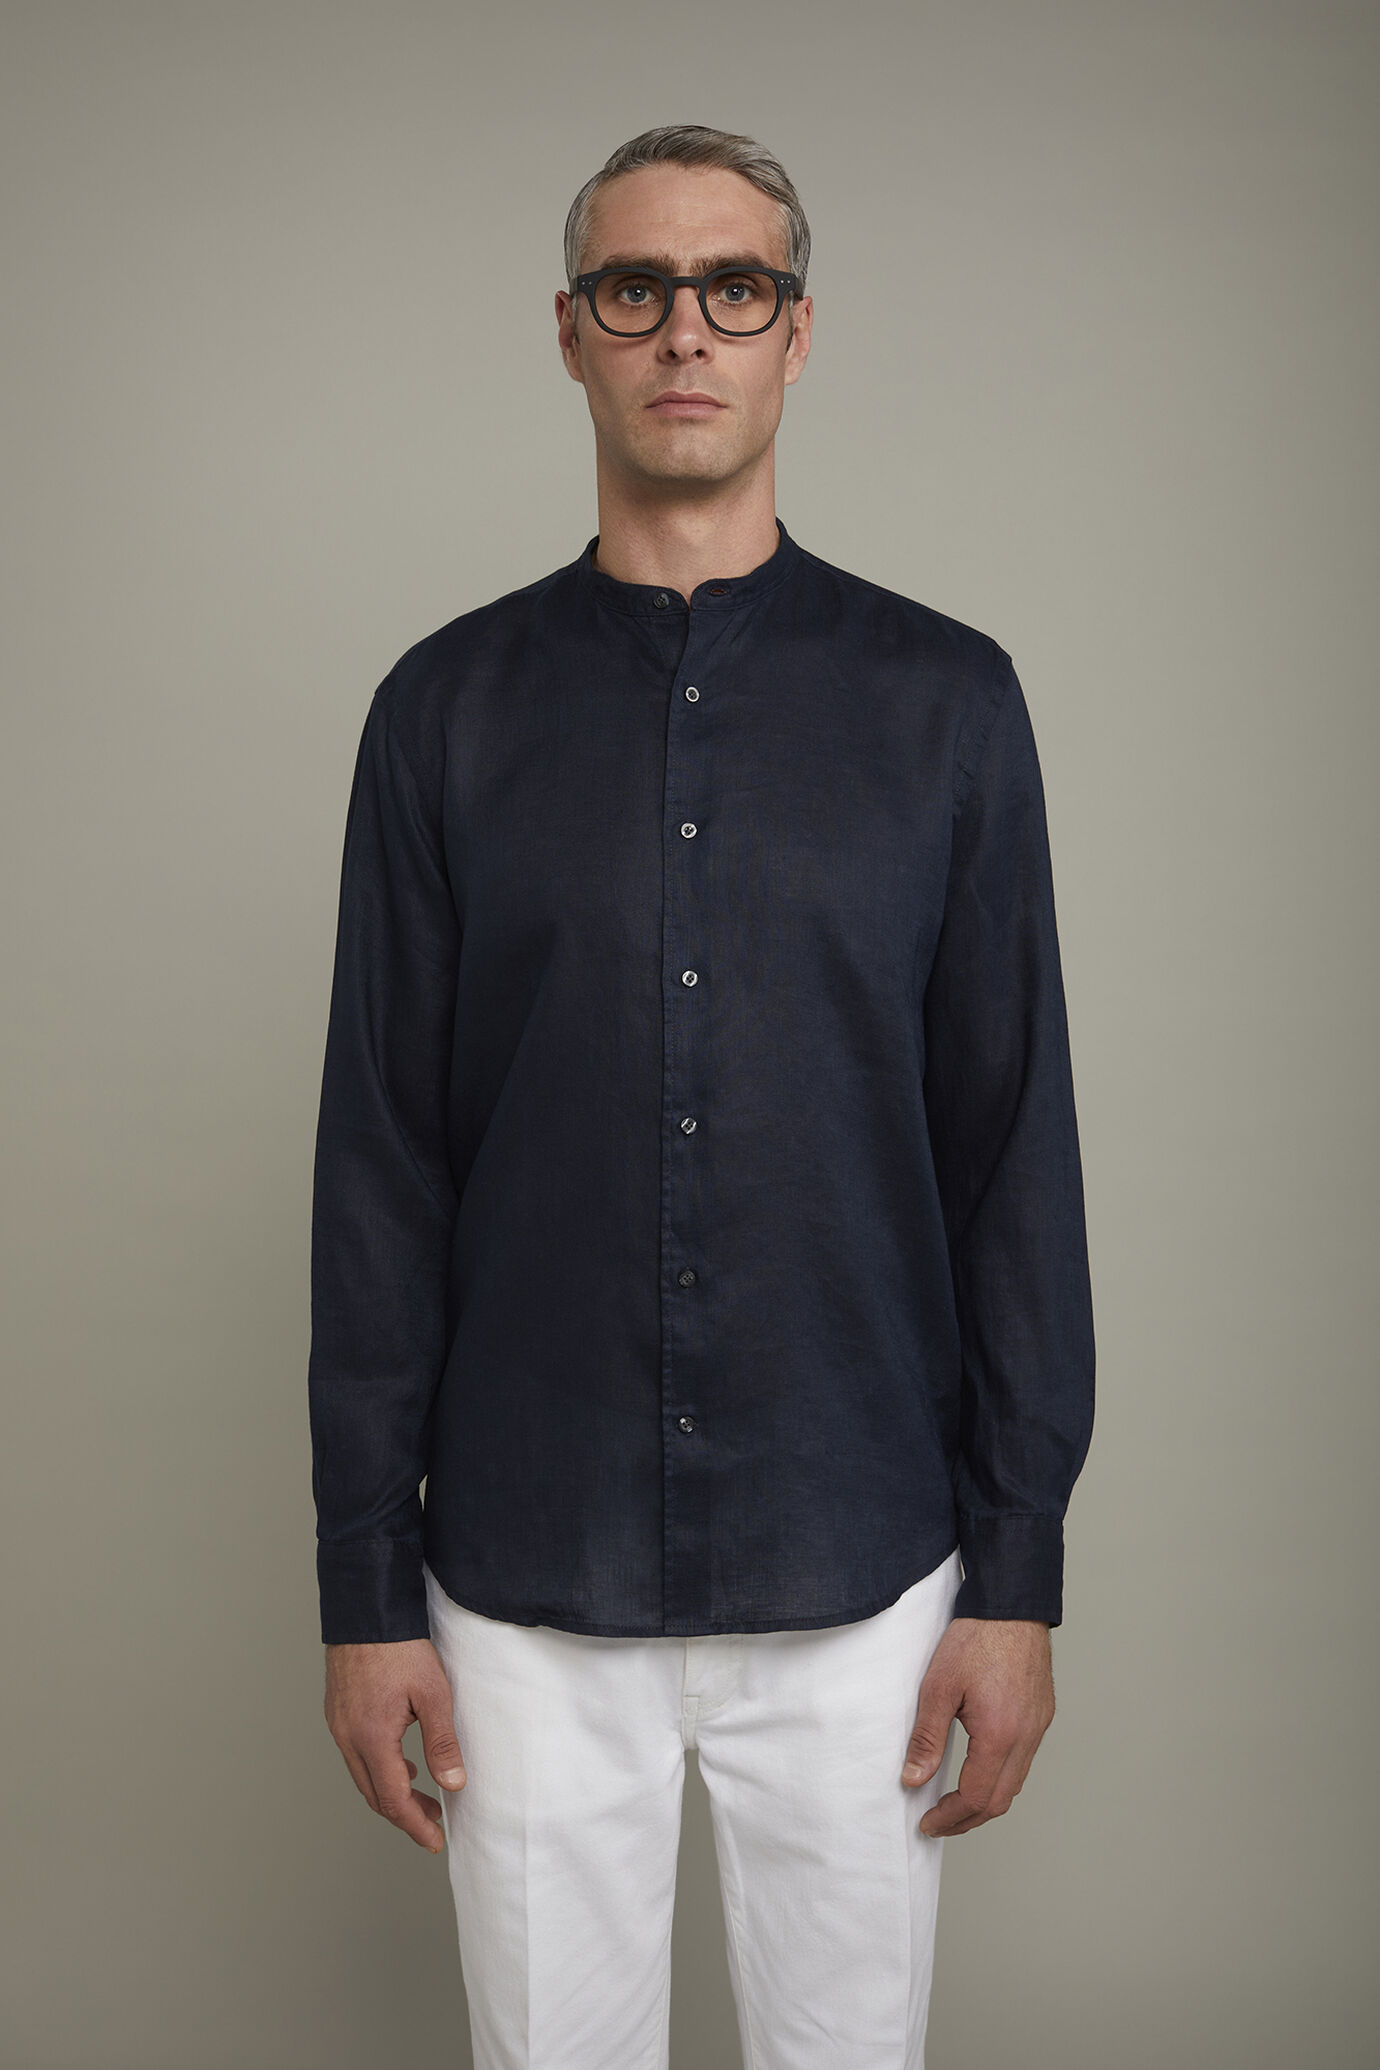 Men’s casual shirt with Korean collar 100% linen comfort fit